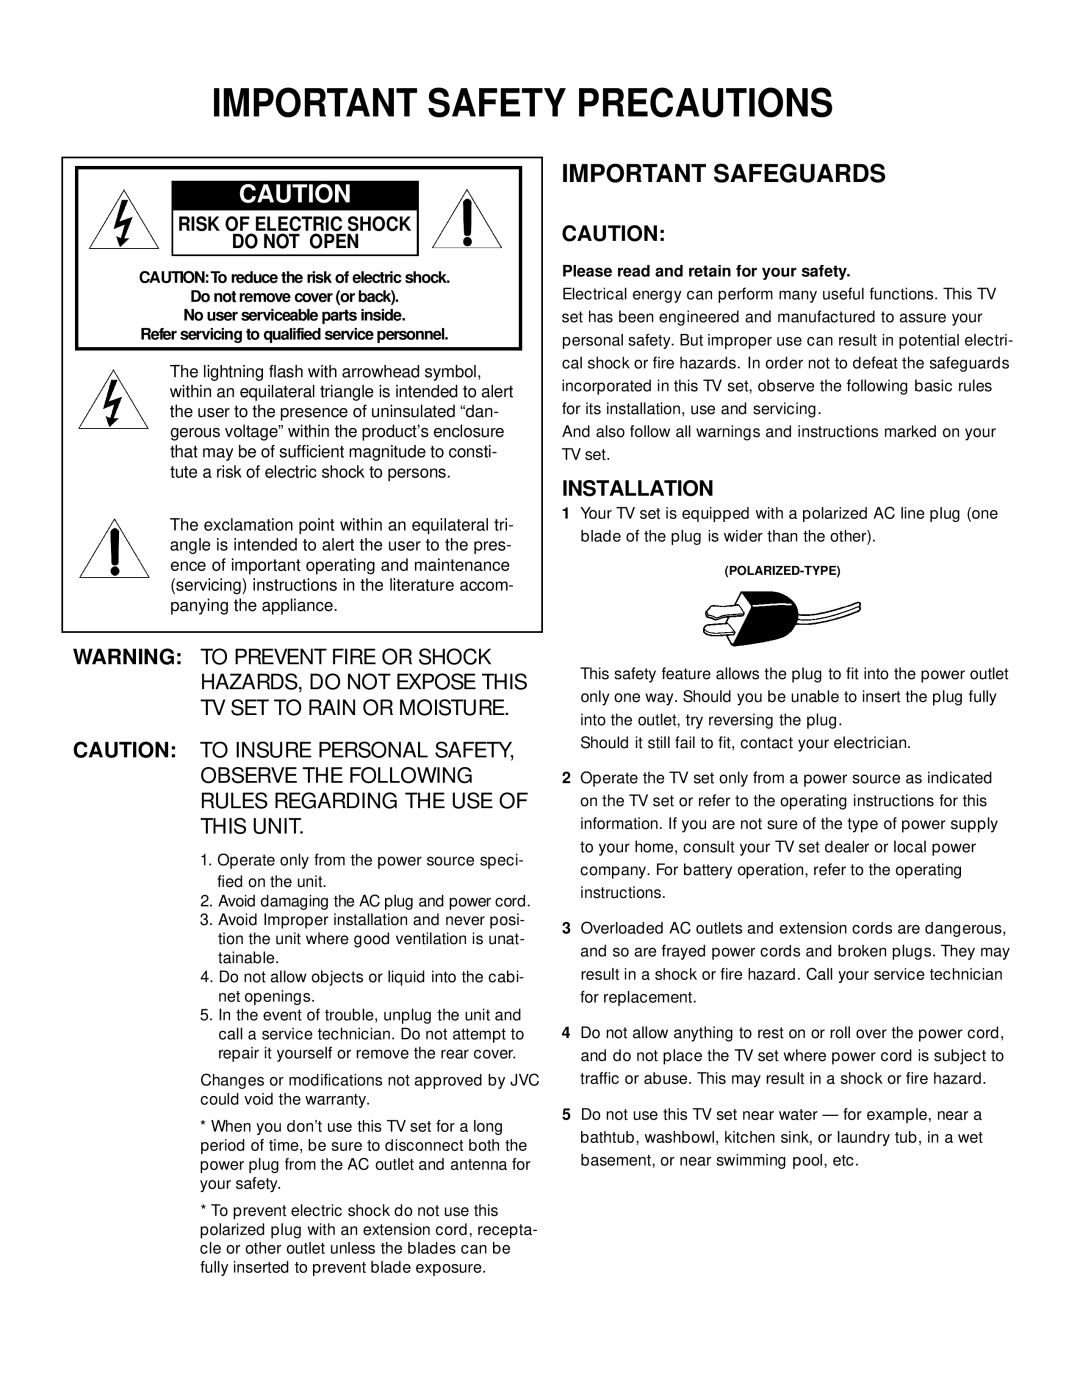 JVC AV-27115, C-13110 manual Important Safety Precautions 